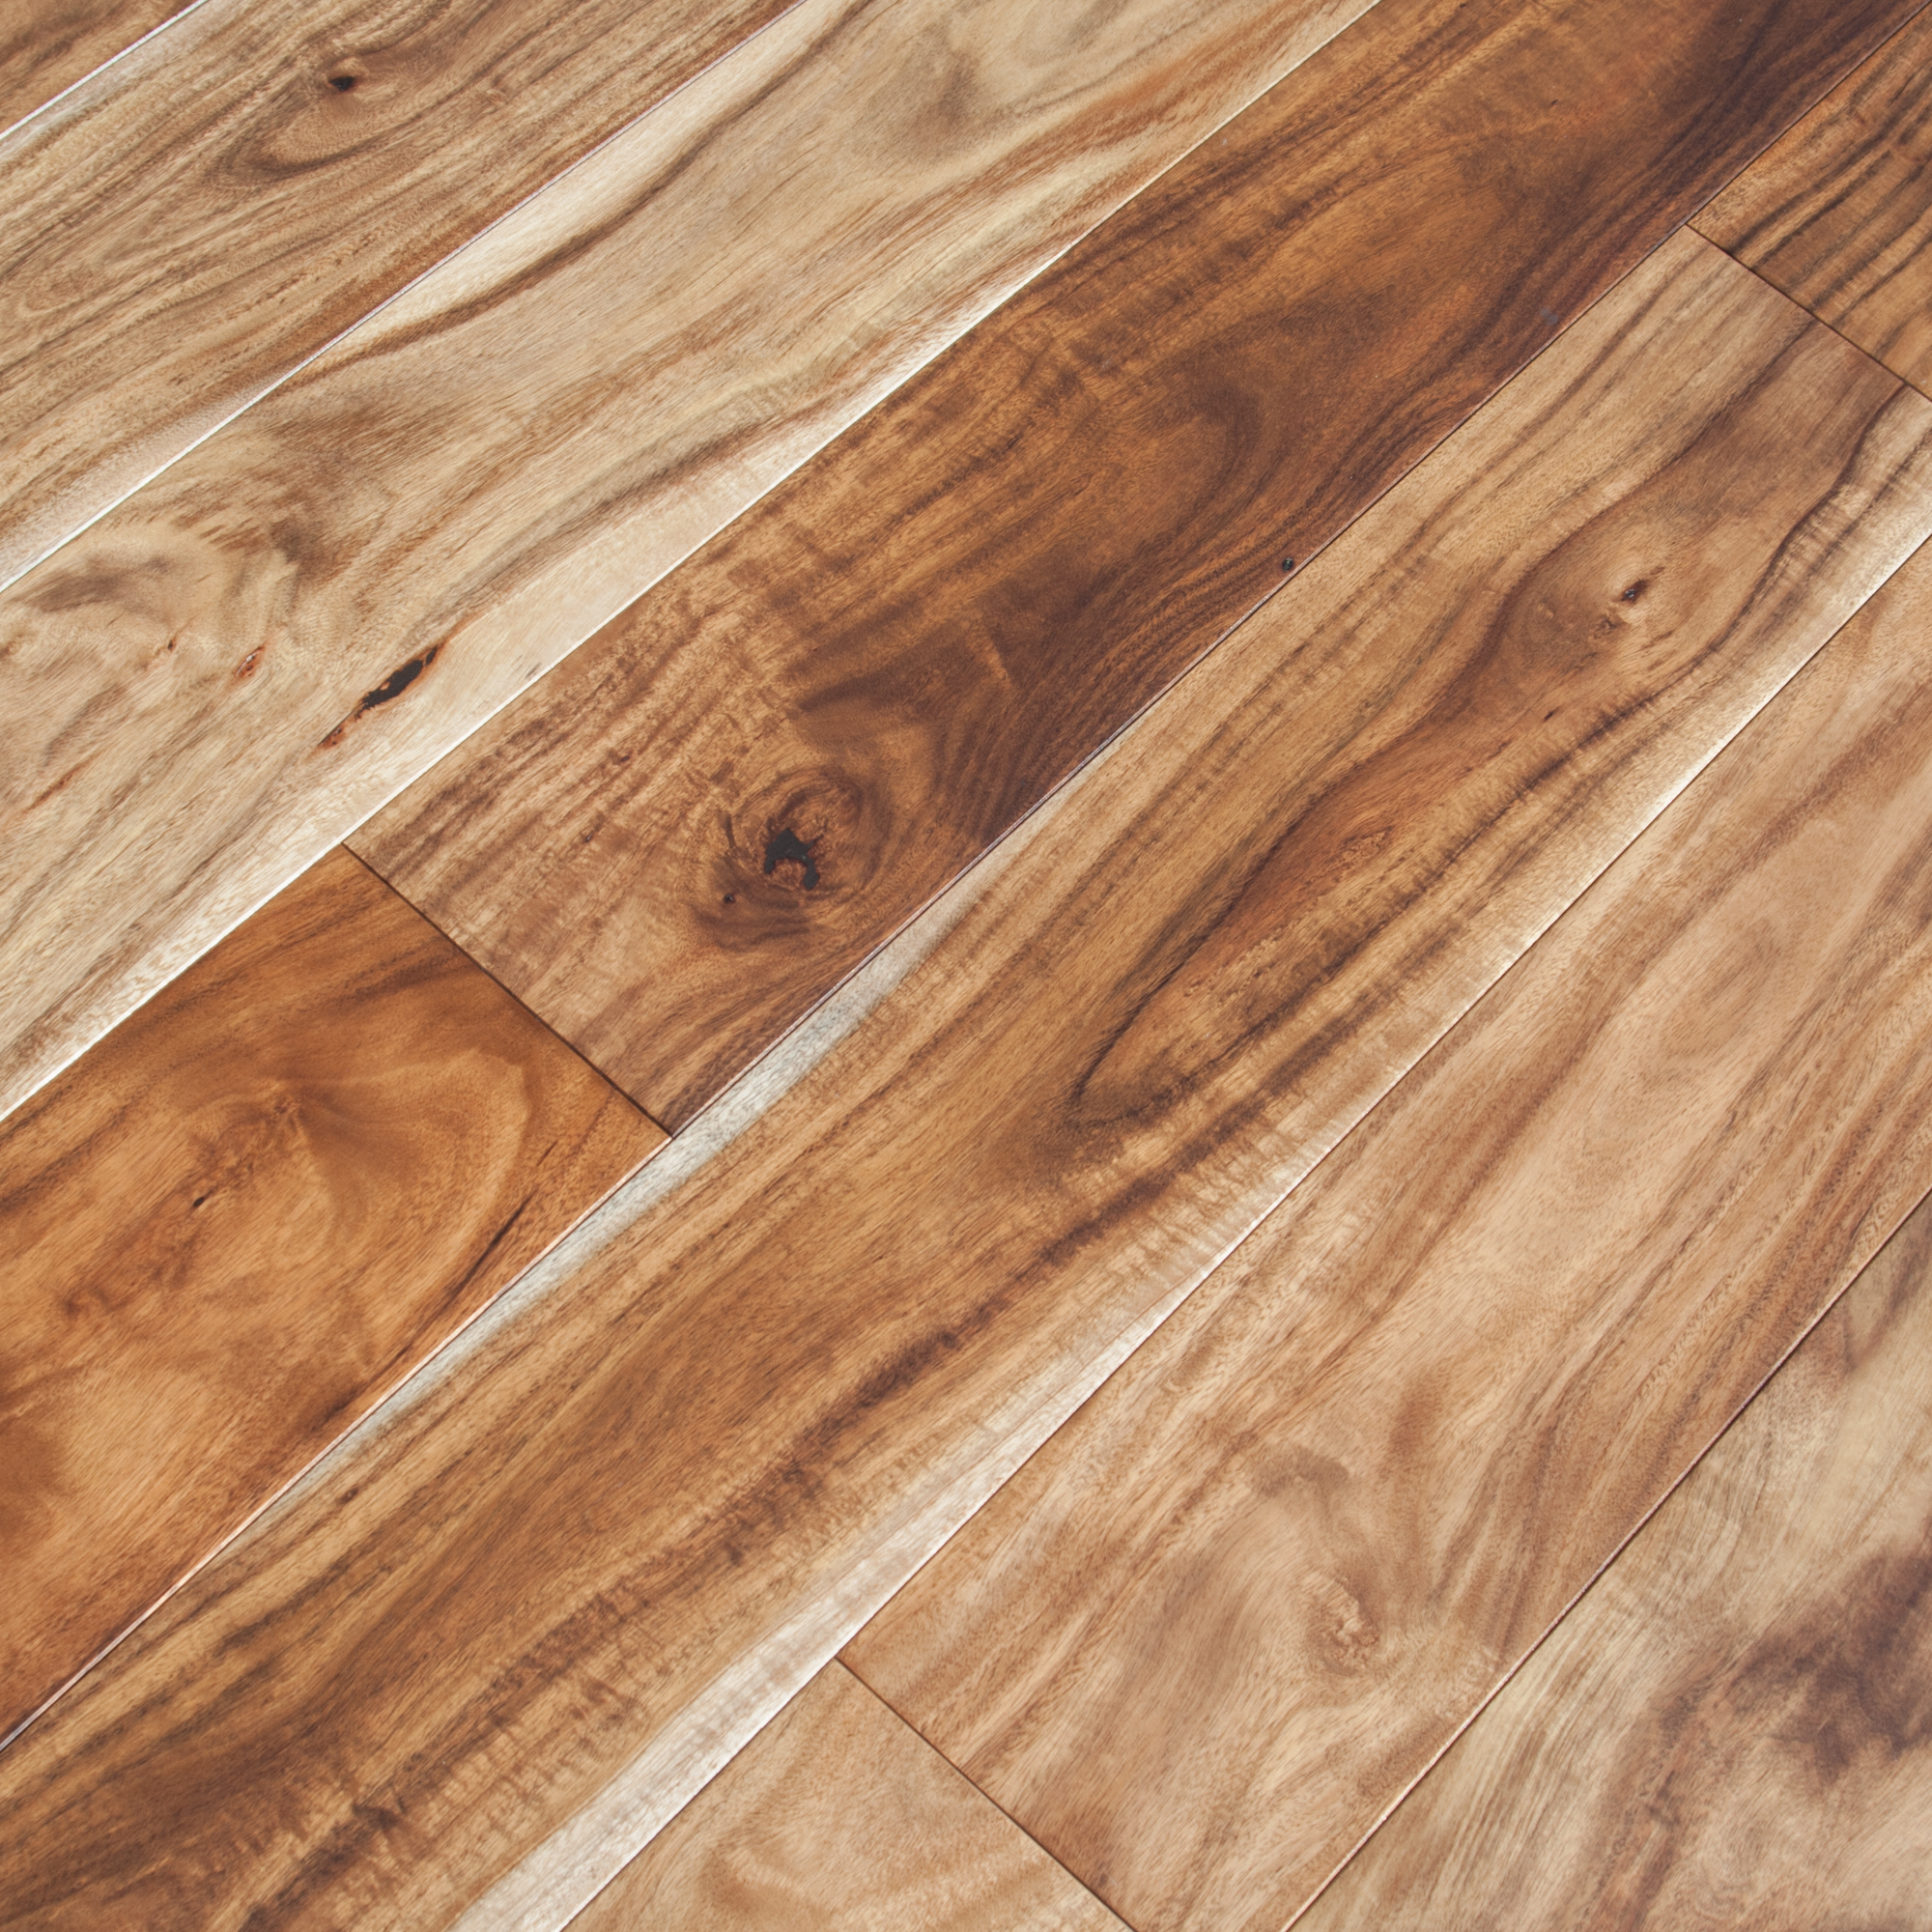 Acacia Hardwood Flooring Unique Wood Floors